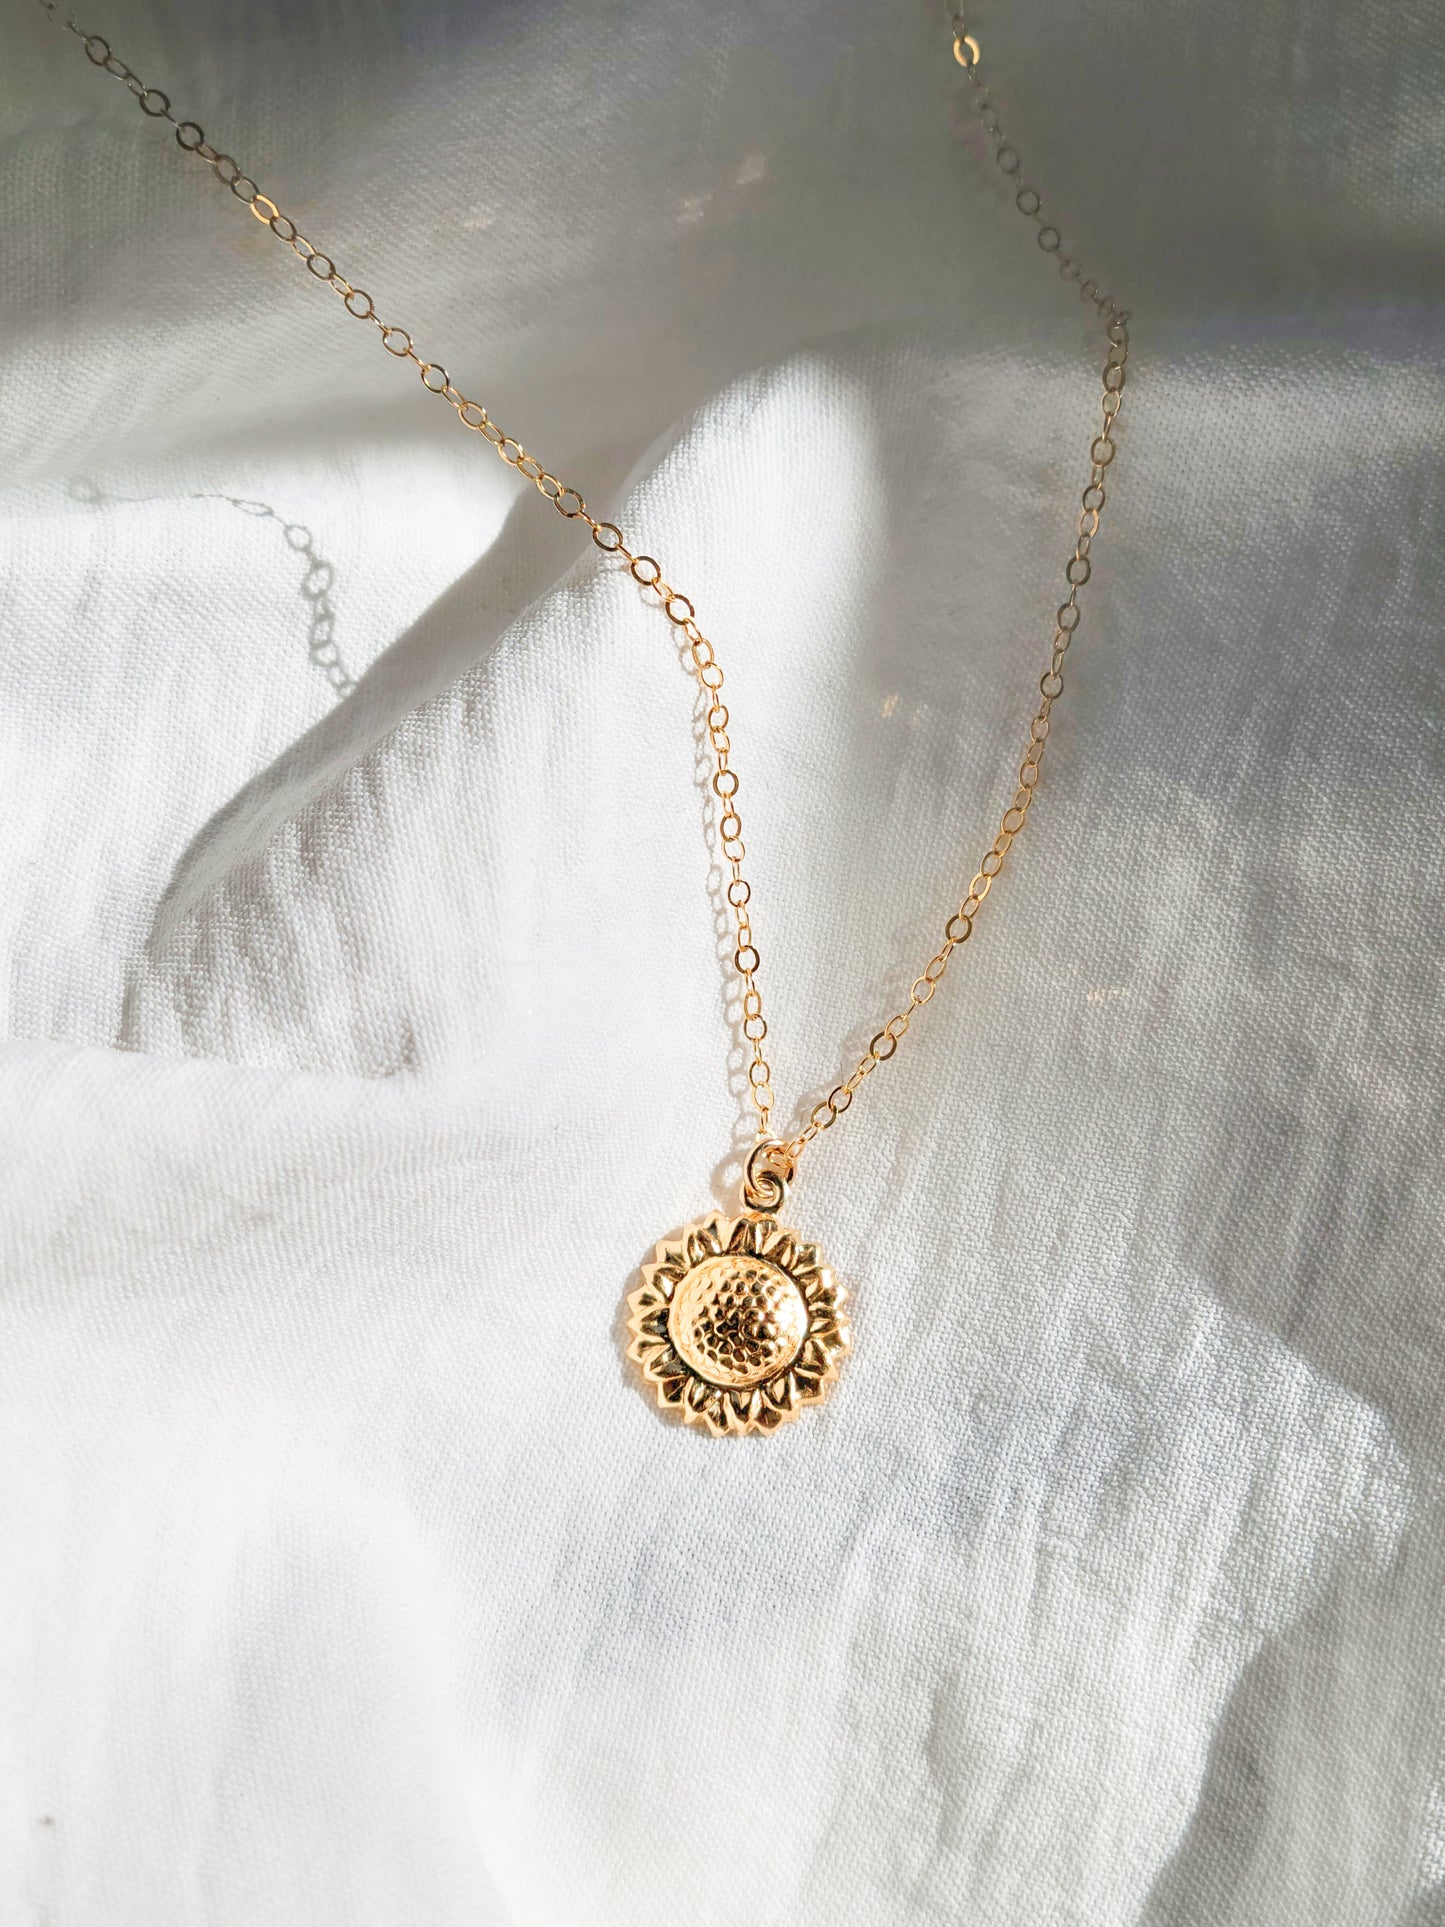 Sunflower - 14K Gold Filled Necklace ∙ Flower Necklace pendant ∙ Daisy Necklace